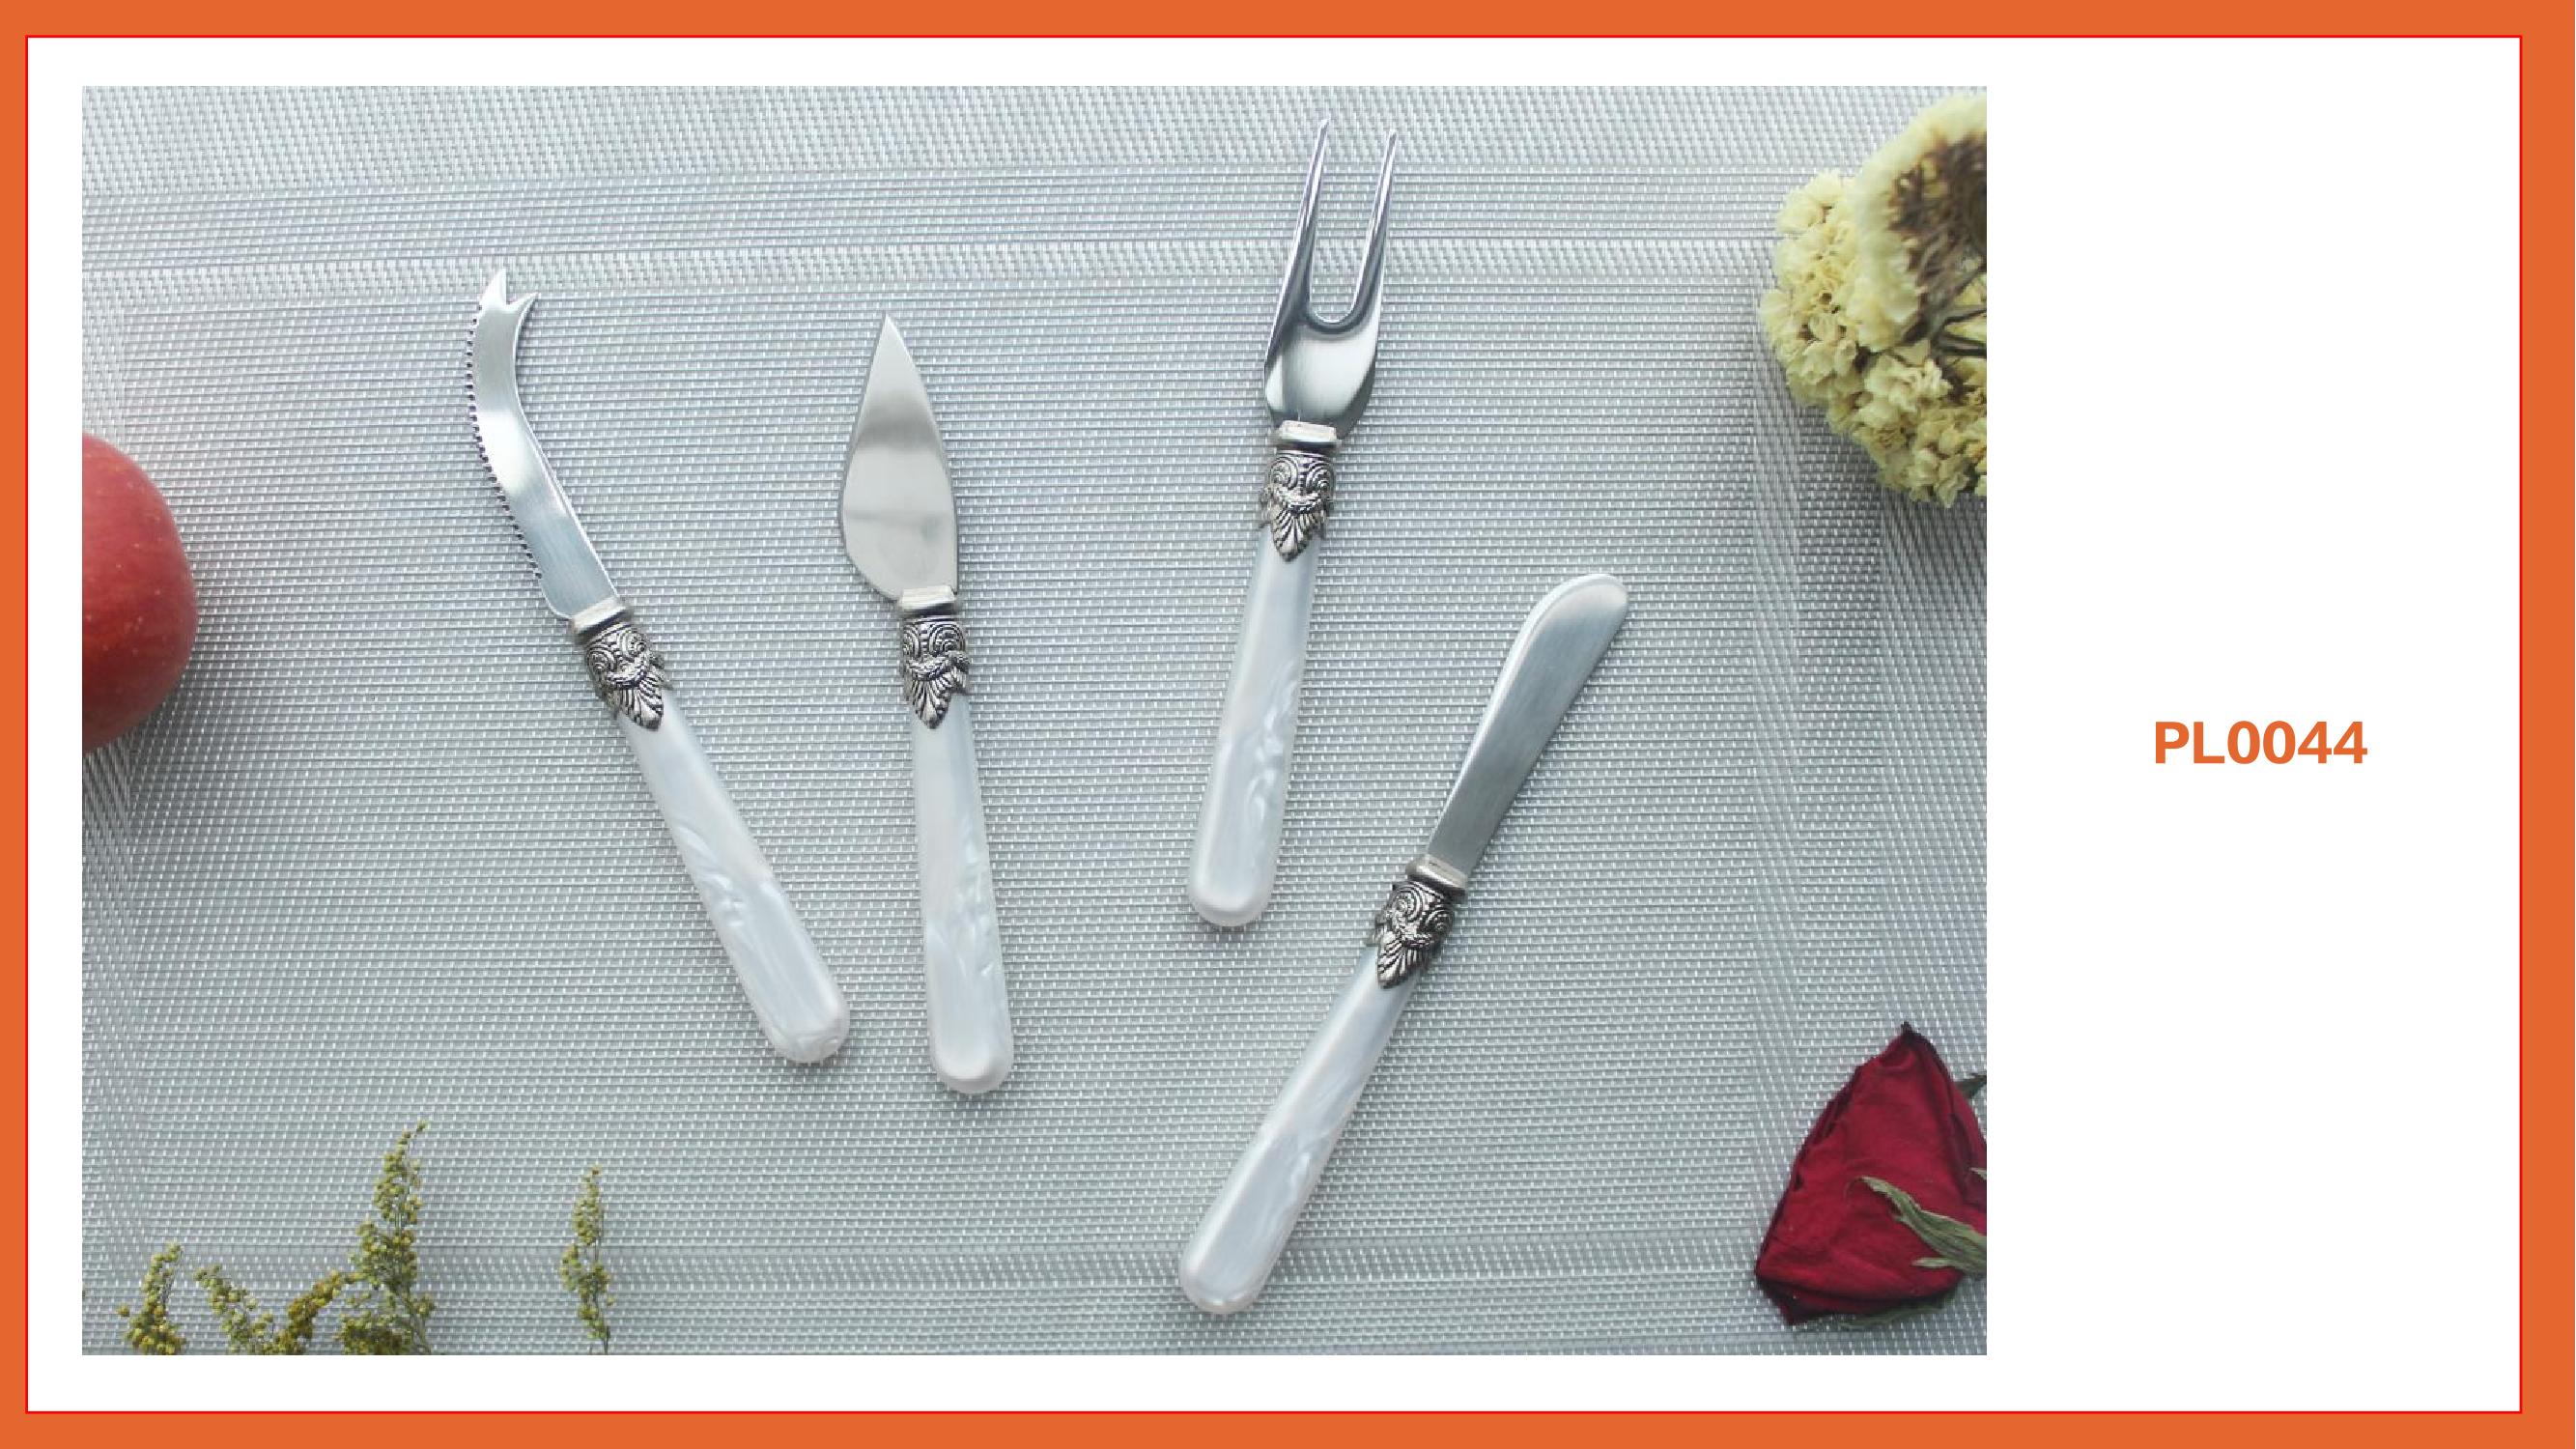 catalogue of plastic handle cutlery_44.jpg